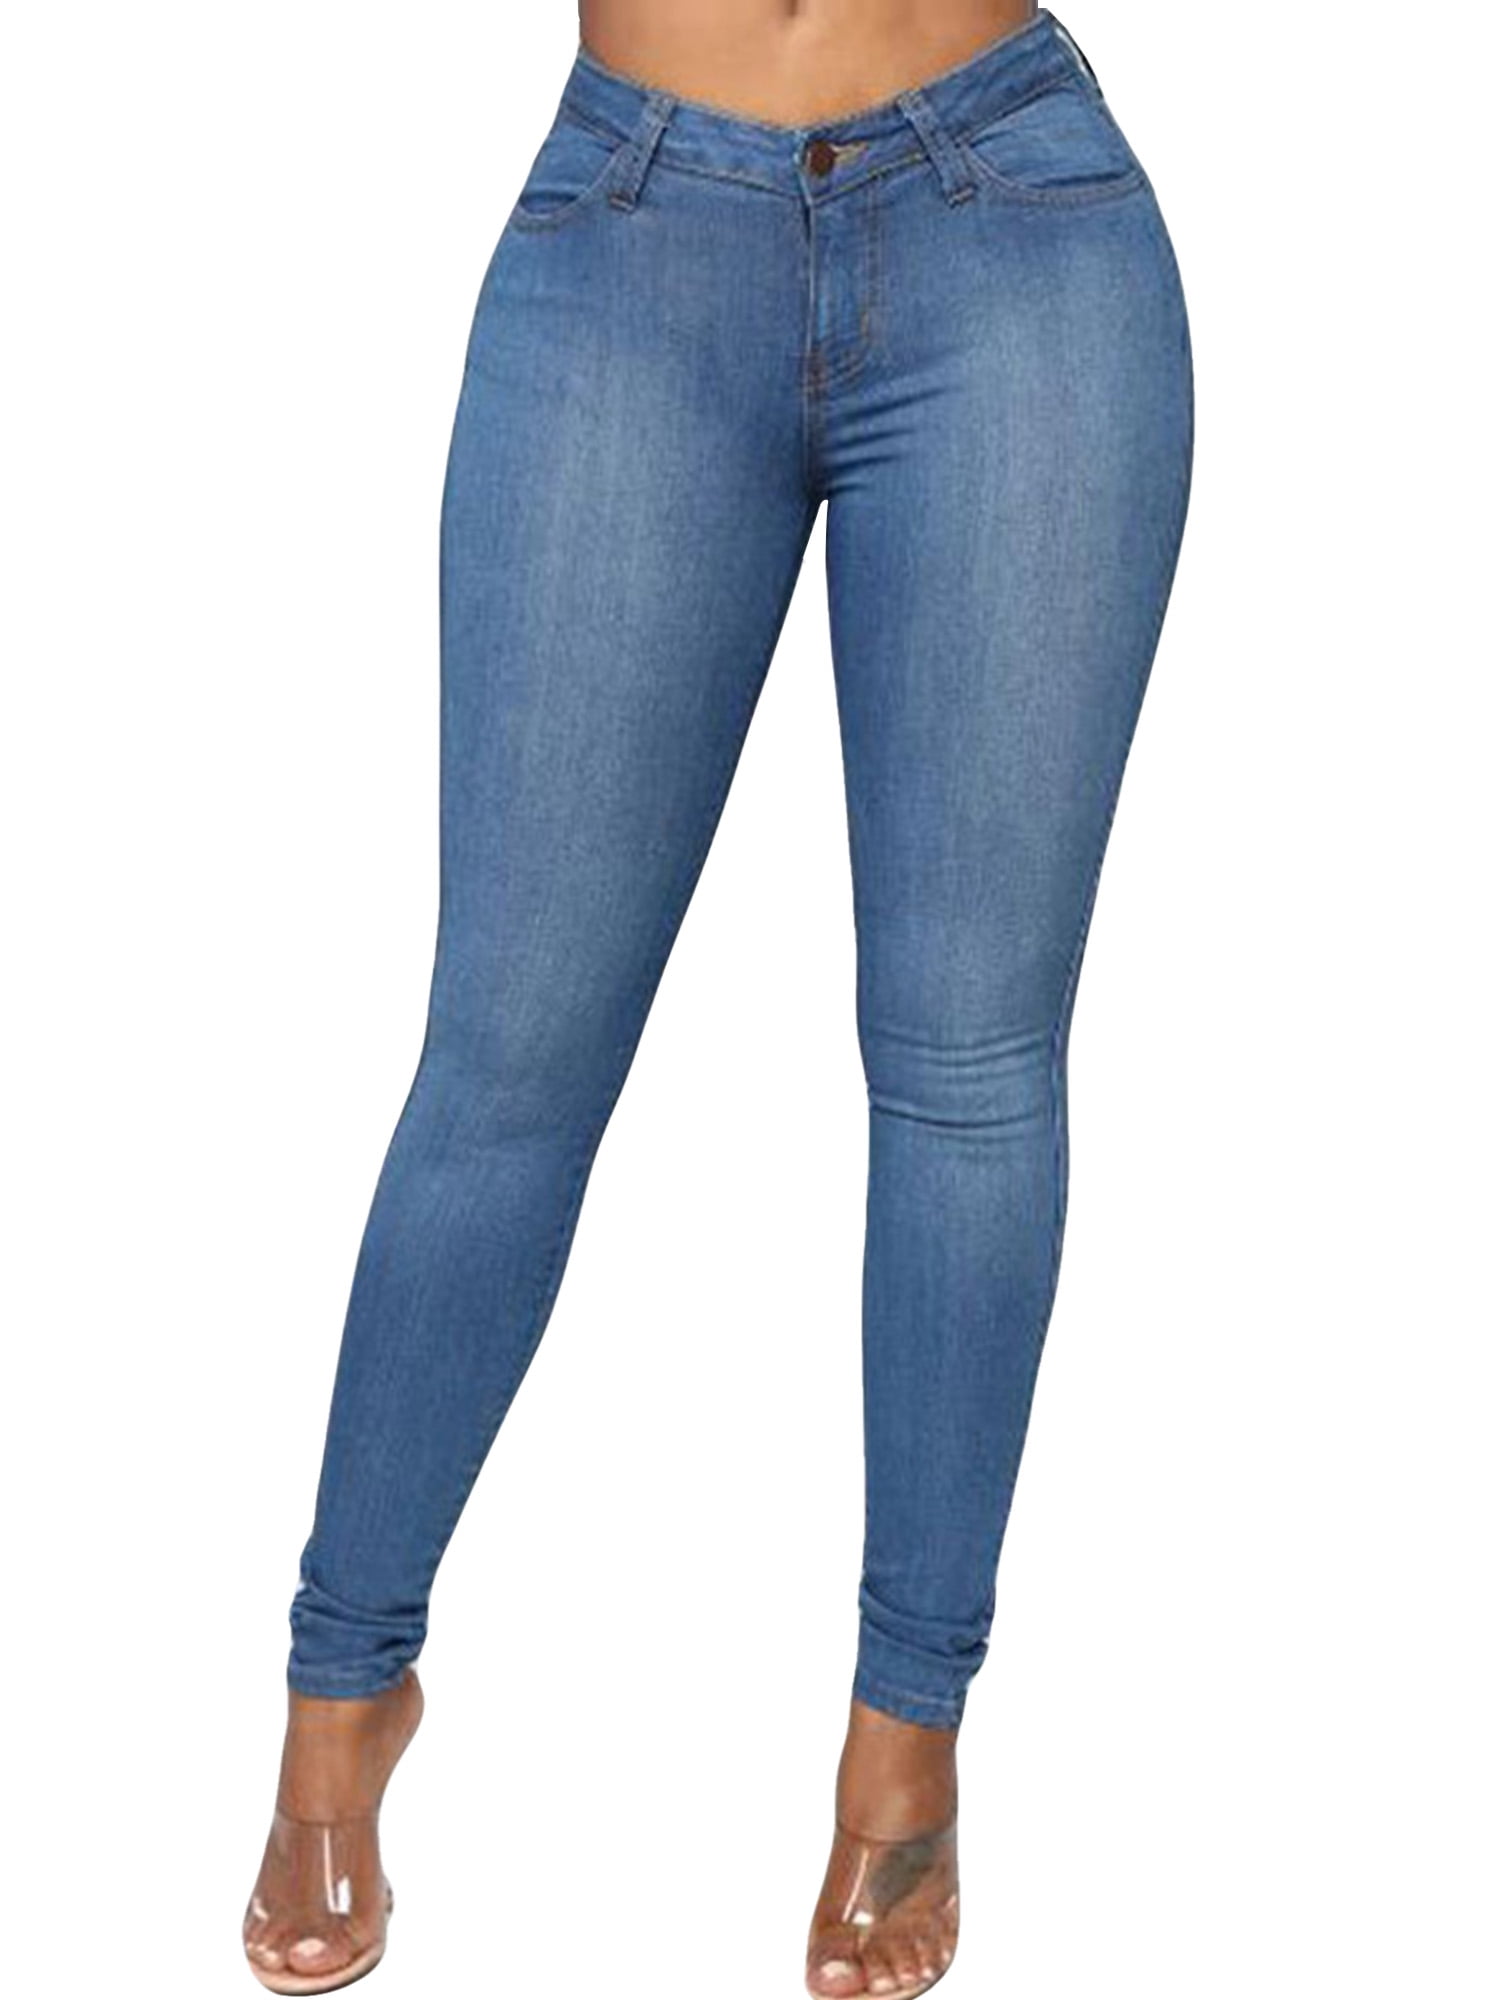  Womens Jeans High Waisted Denim Jeans For Women Capris For  Women Casual Summer Jeans Light Blue Jeans Women Jeggings Tummy Control  Denim Jeans Medium Blue Size X-Large Size 16 Size